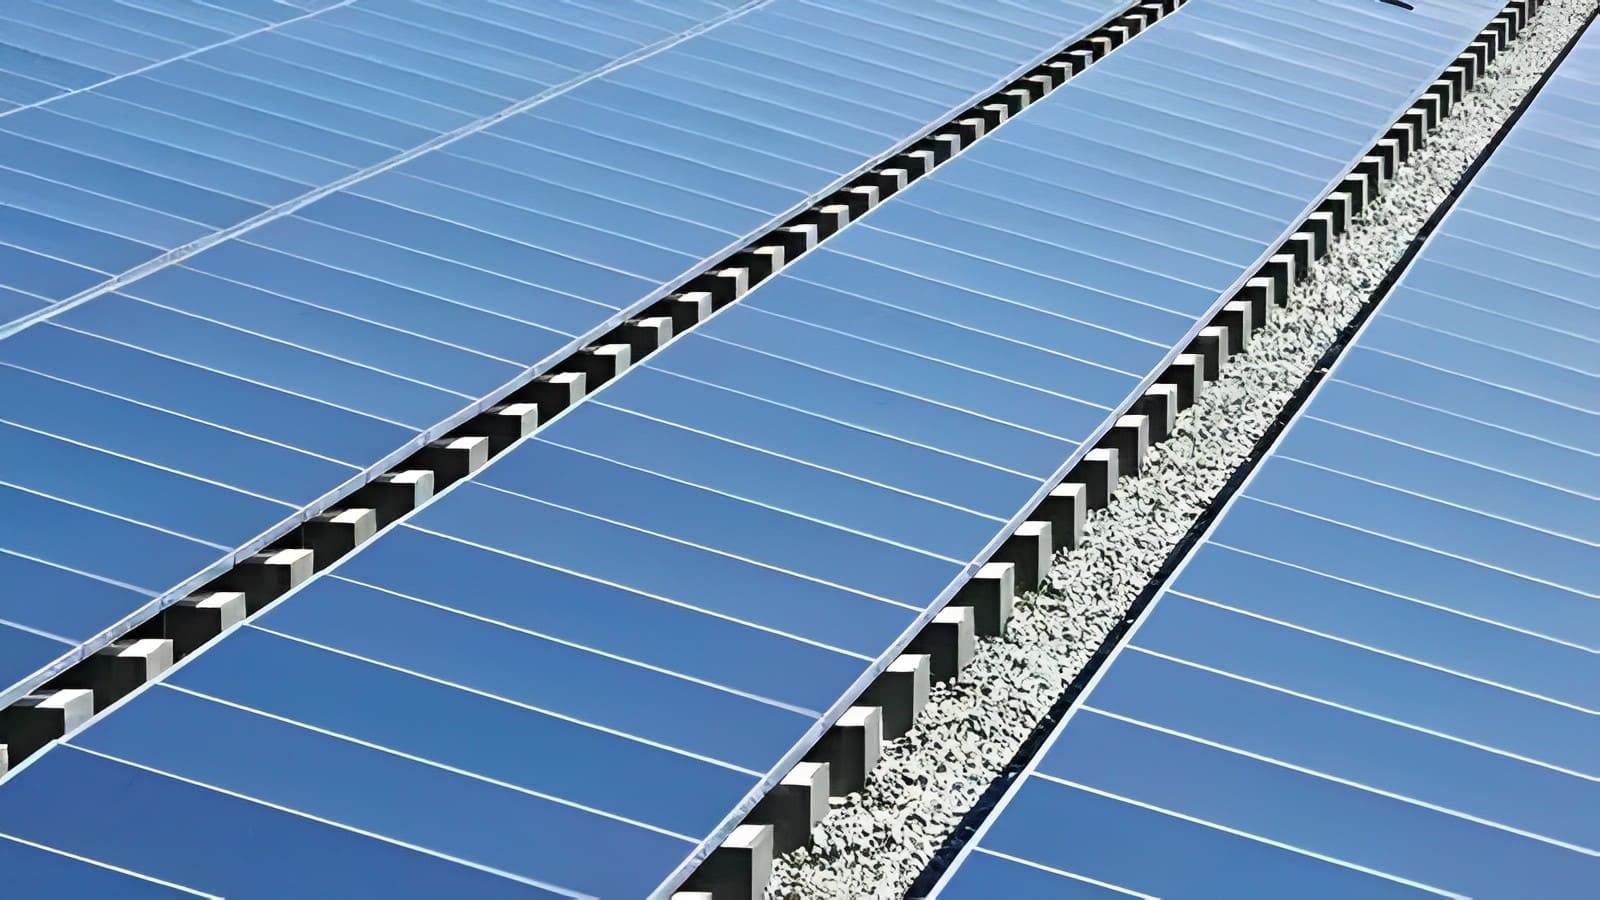 Gaurs Group establishes 15MW solar power plant in Madhya Pradesh for Rs 80 Cr